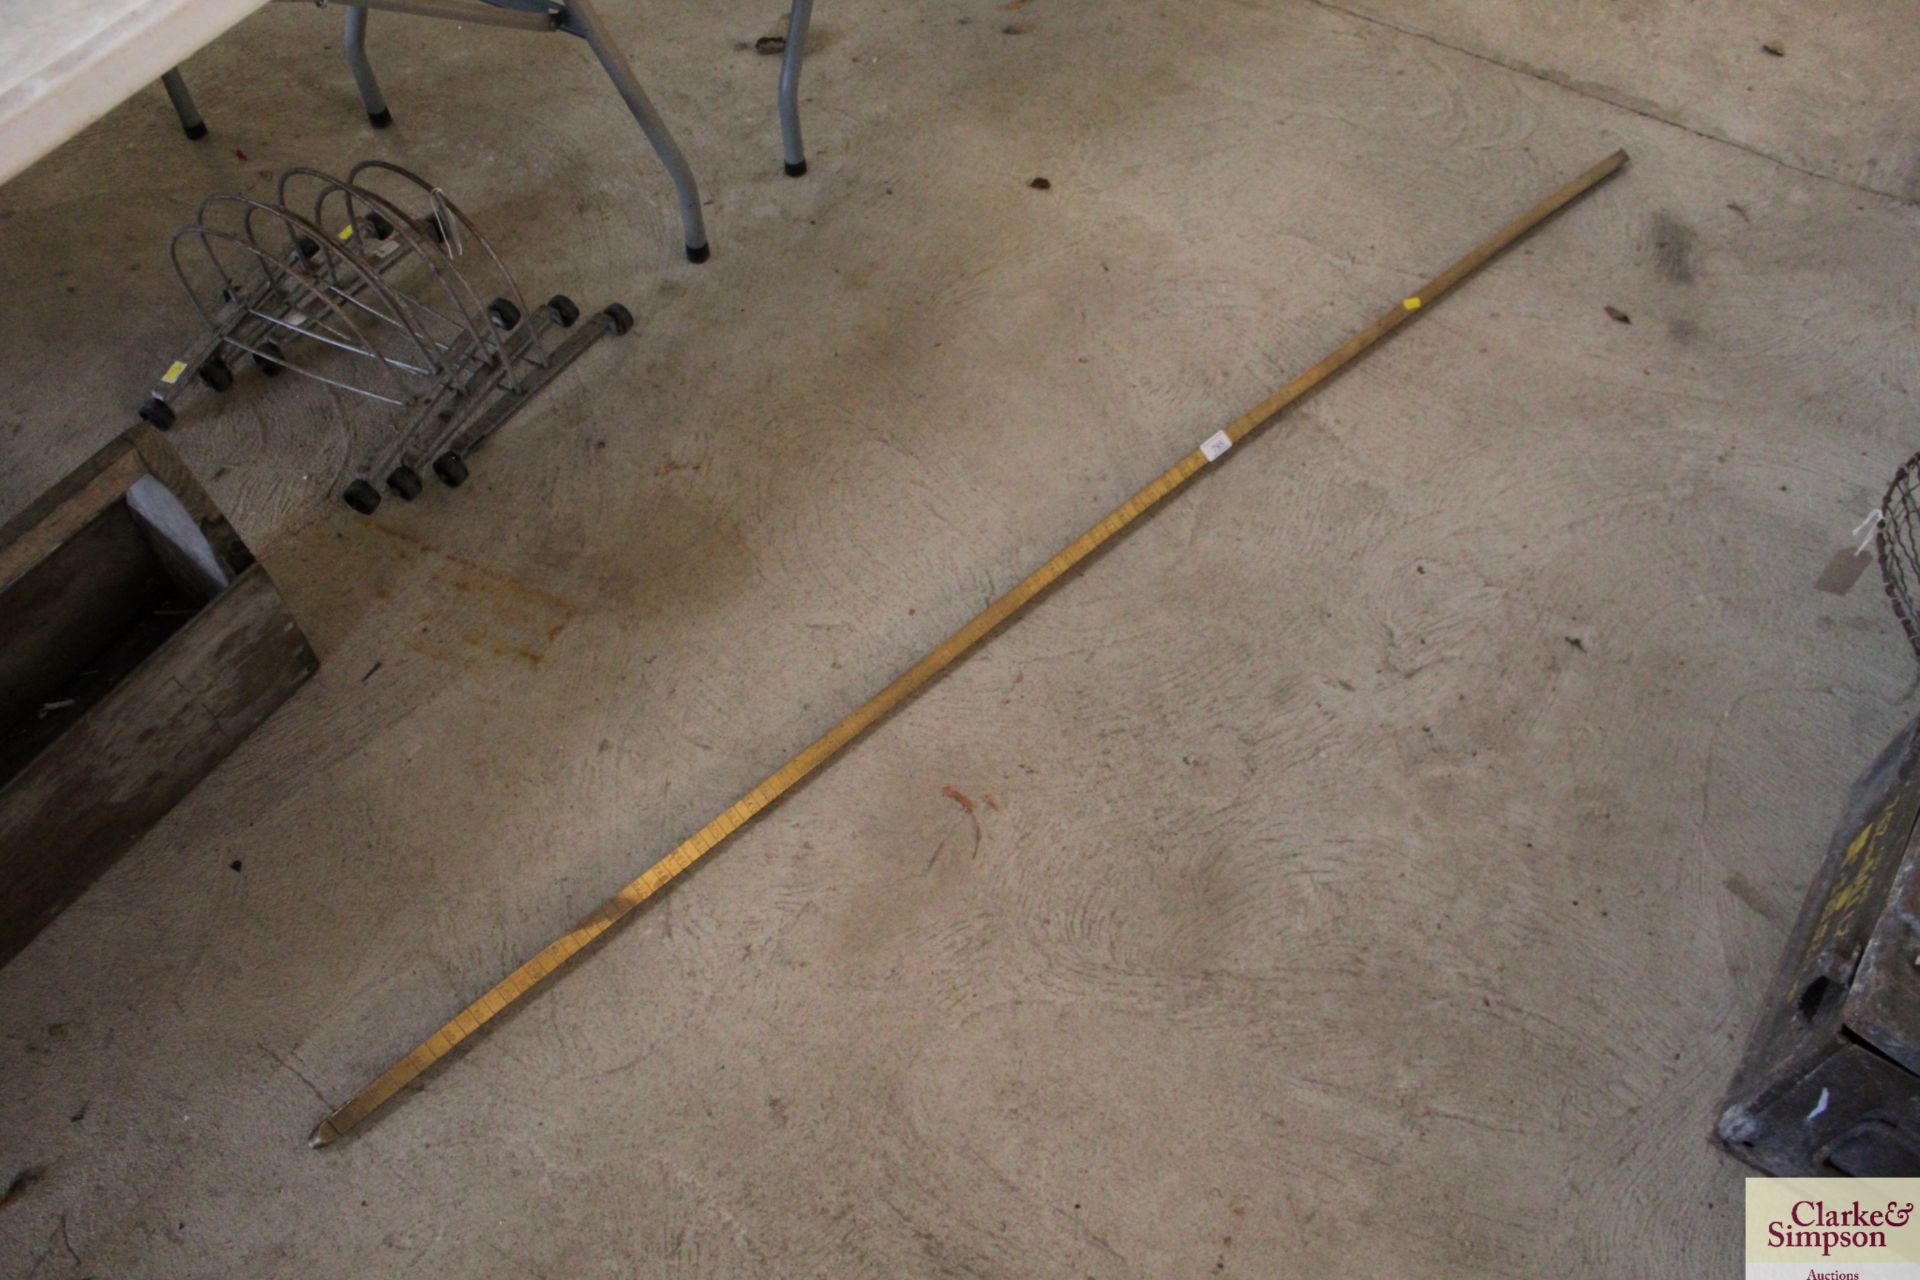 A brass tank fluid measuring stick